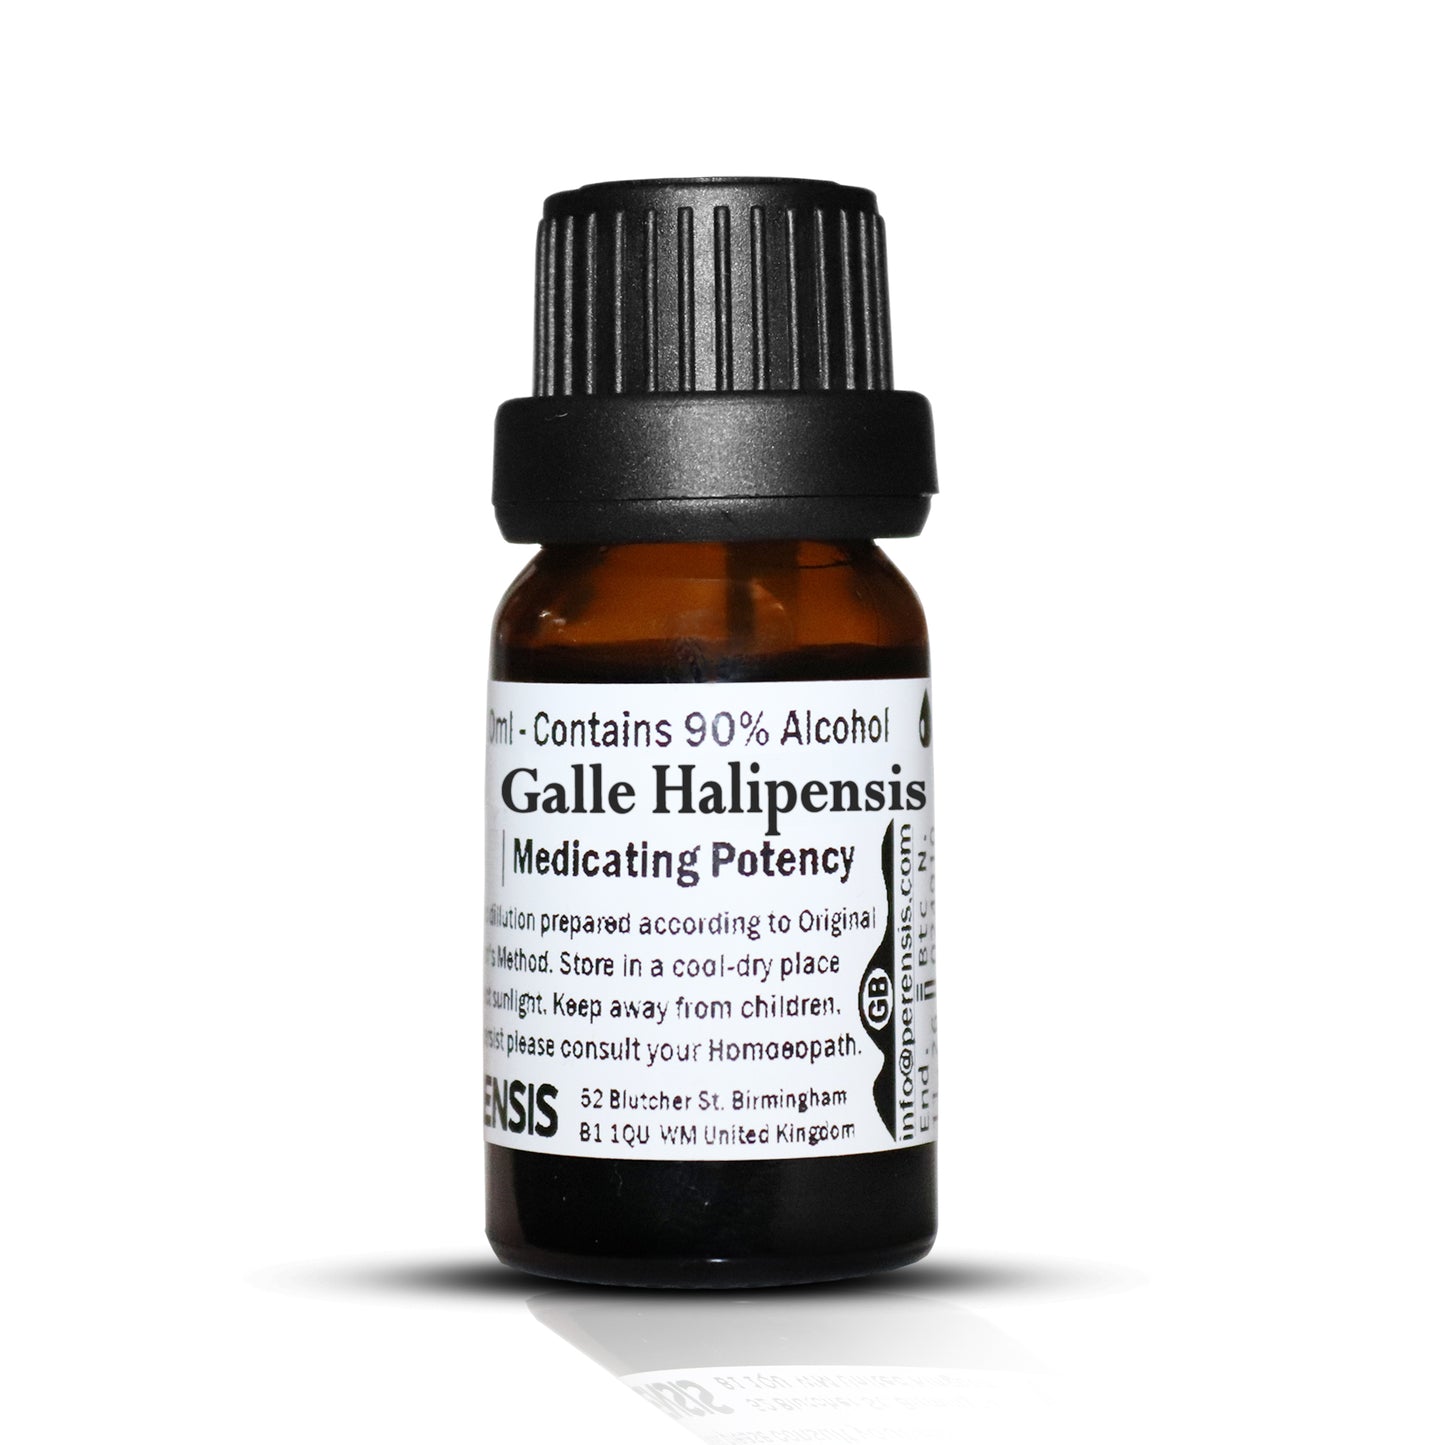 Galle Halipensis